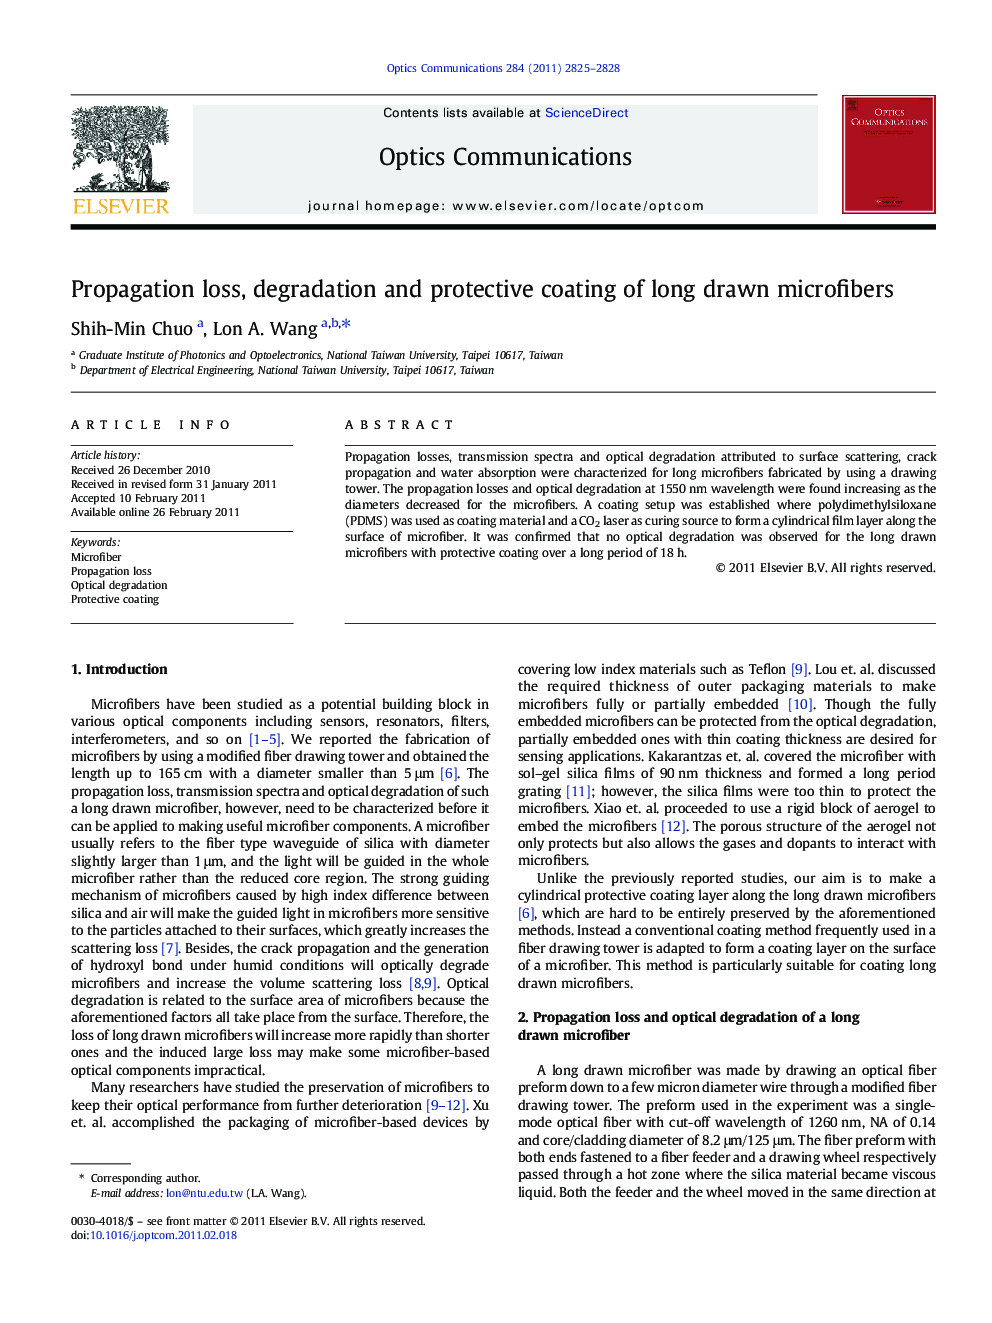 Propagation loss, degradation and protective coating of long drawn microfibers